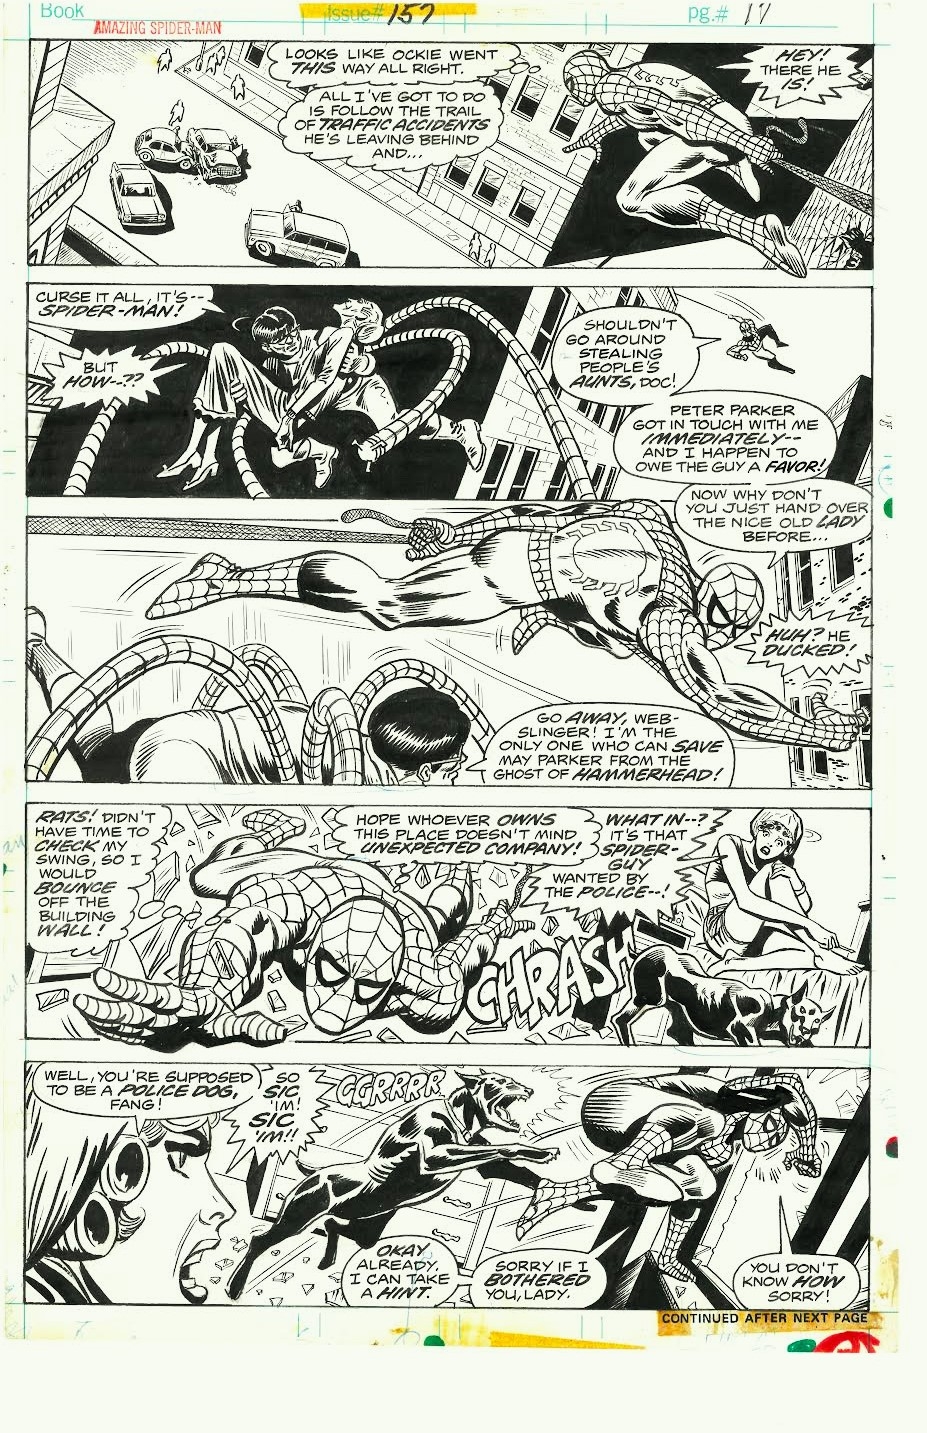 Amazing Spider-man 157 Ross Andru (pencils) Mike Esposito (inks) 1963 Comic Art